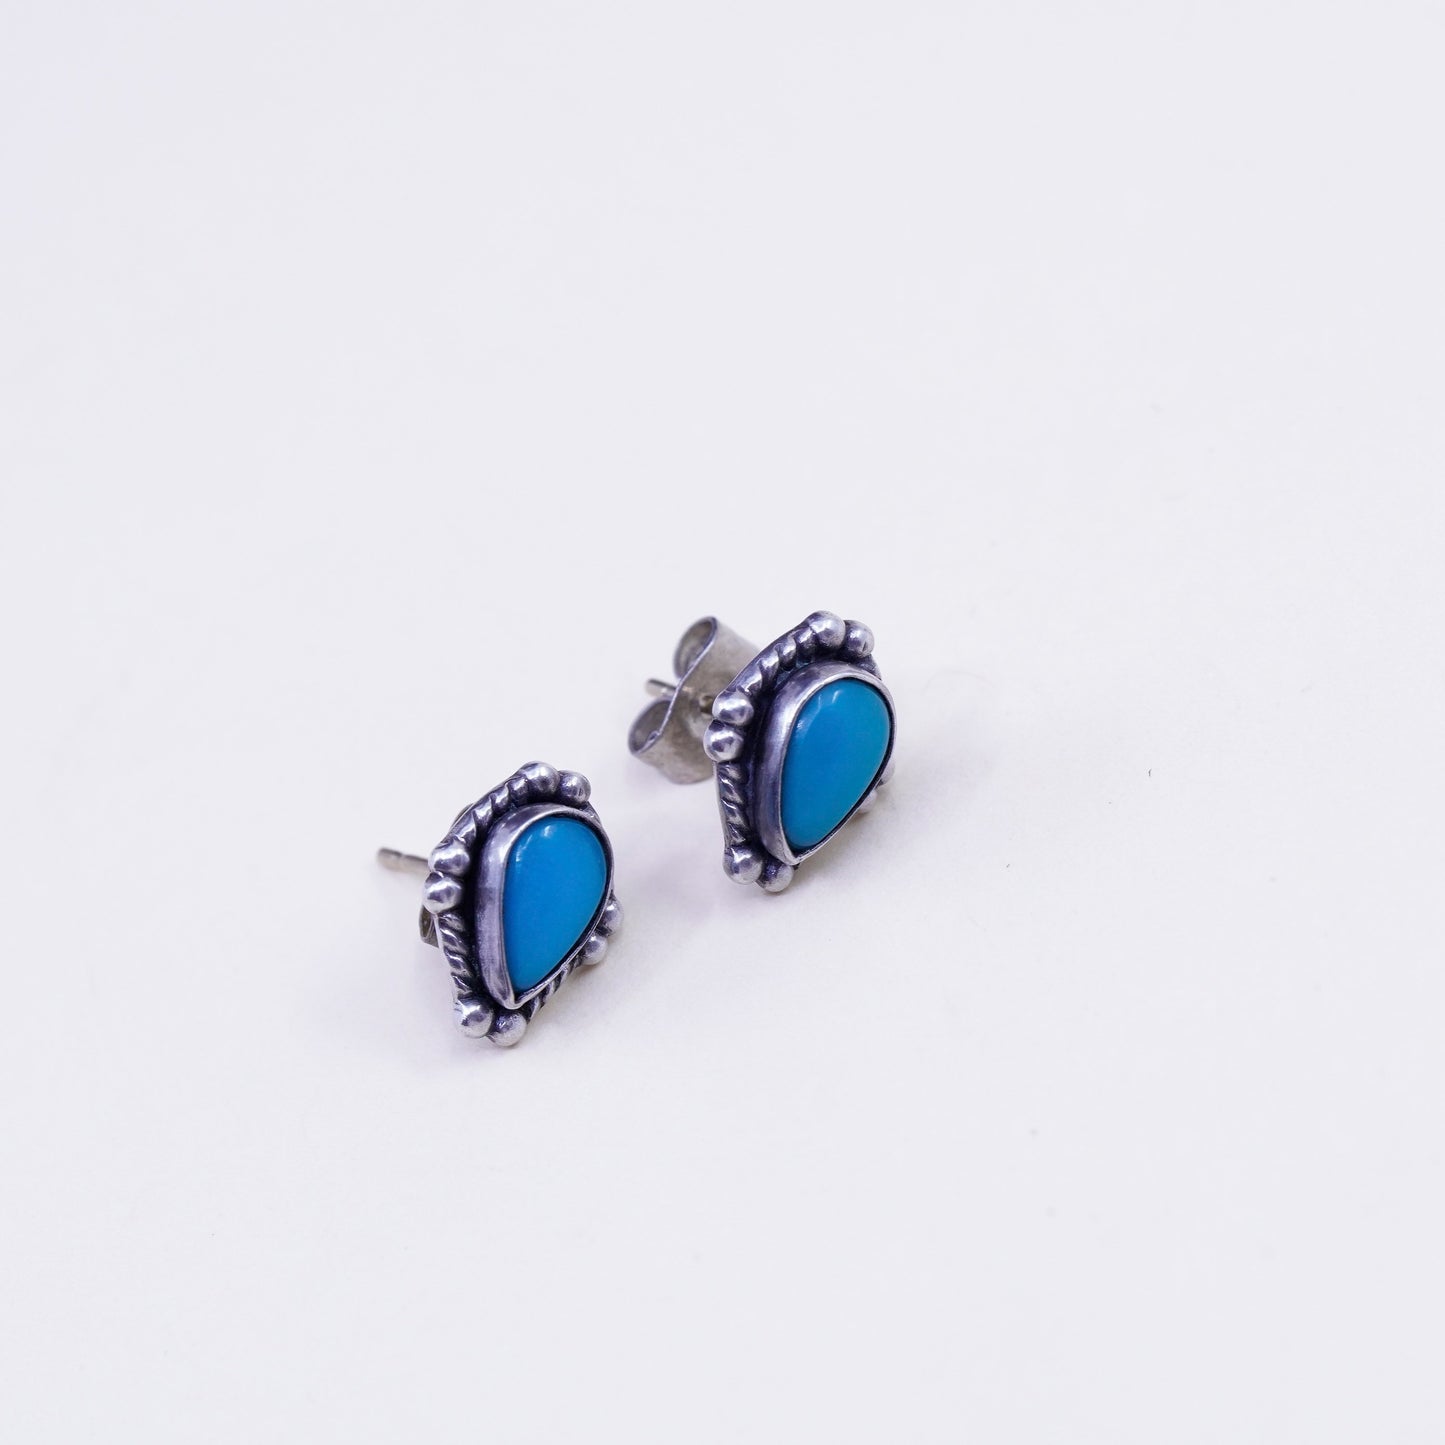 Vintage sterling silver handmade earrings, southwestern 925 studs w/ turquoise